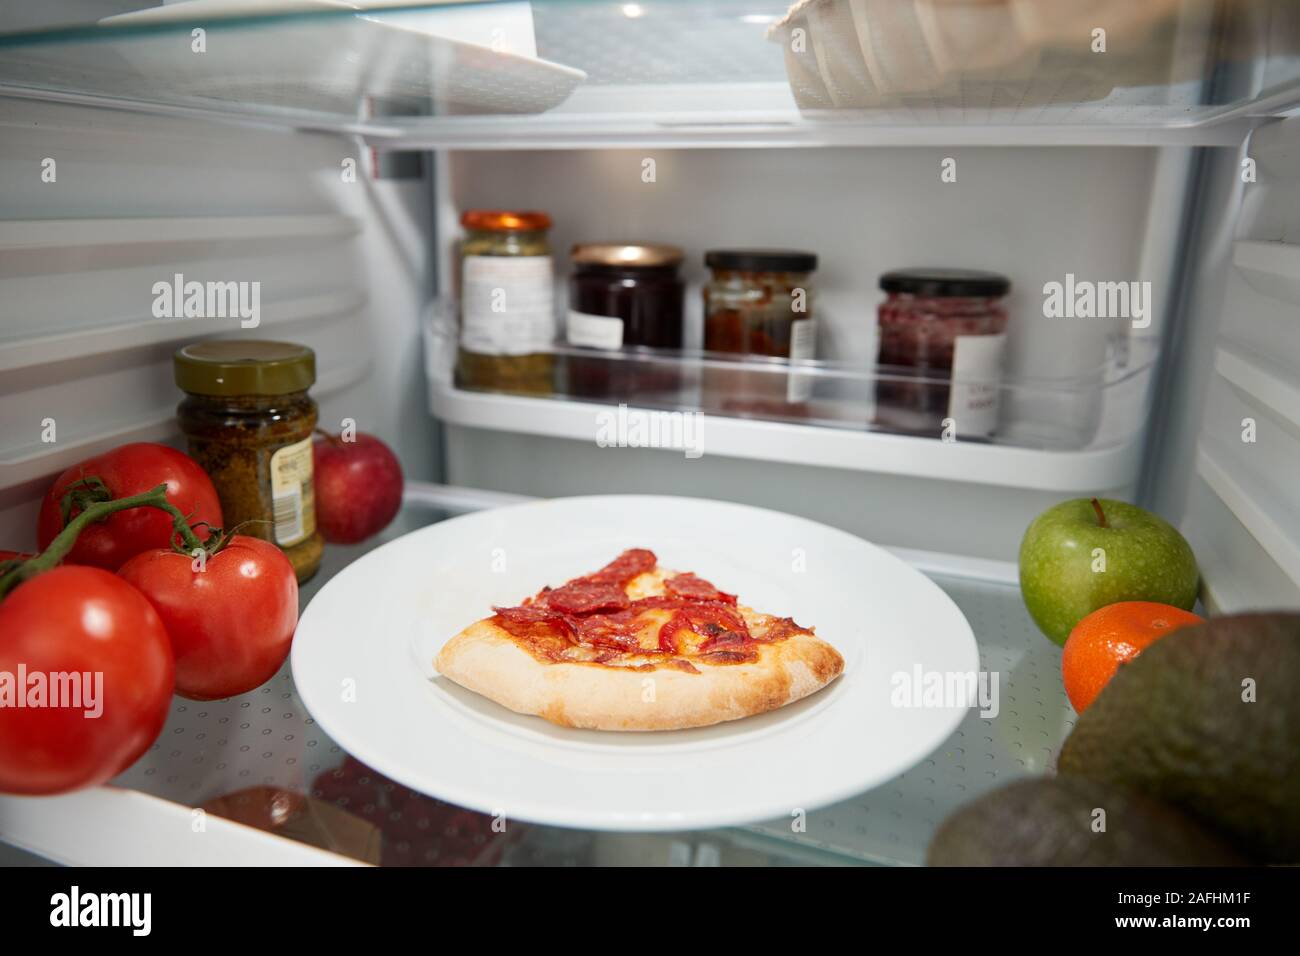 View Inside Refrigerator Of Leftover Takeaway Pizza Slice On Shelf Stock Photo